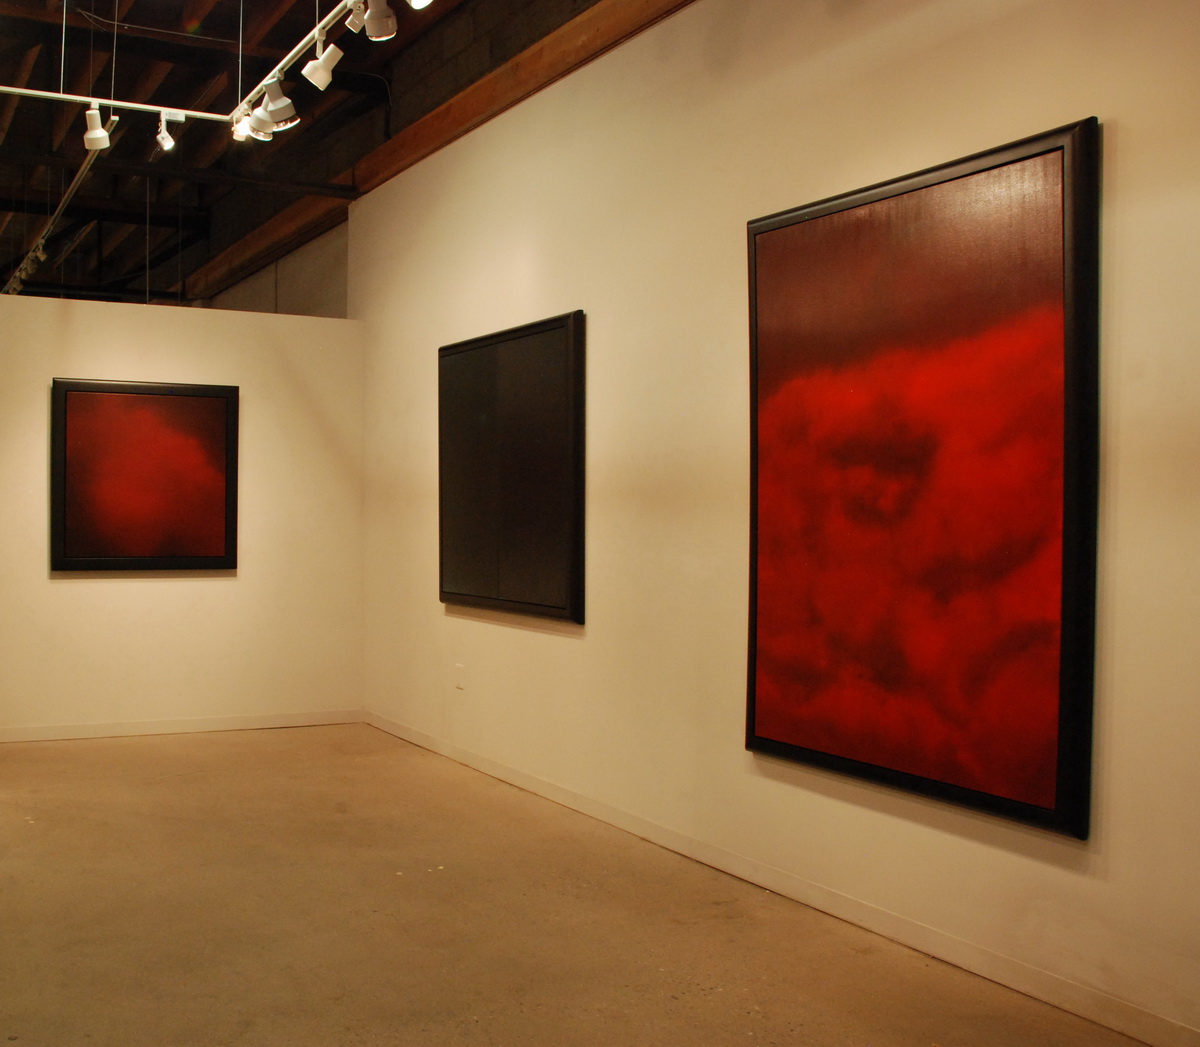 Paintings in an Exhibit